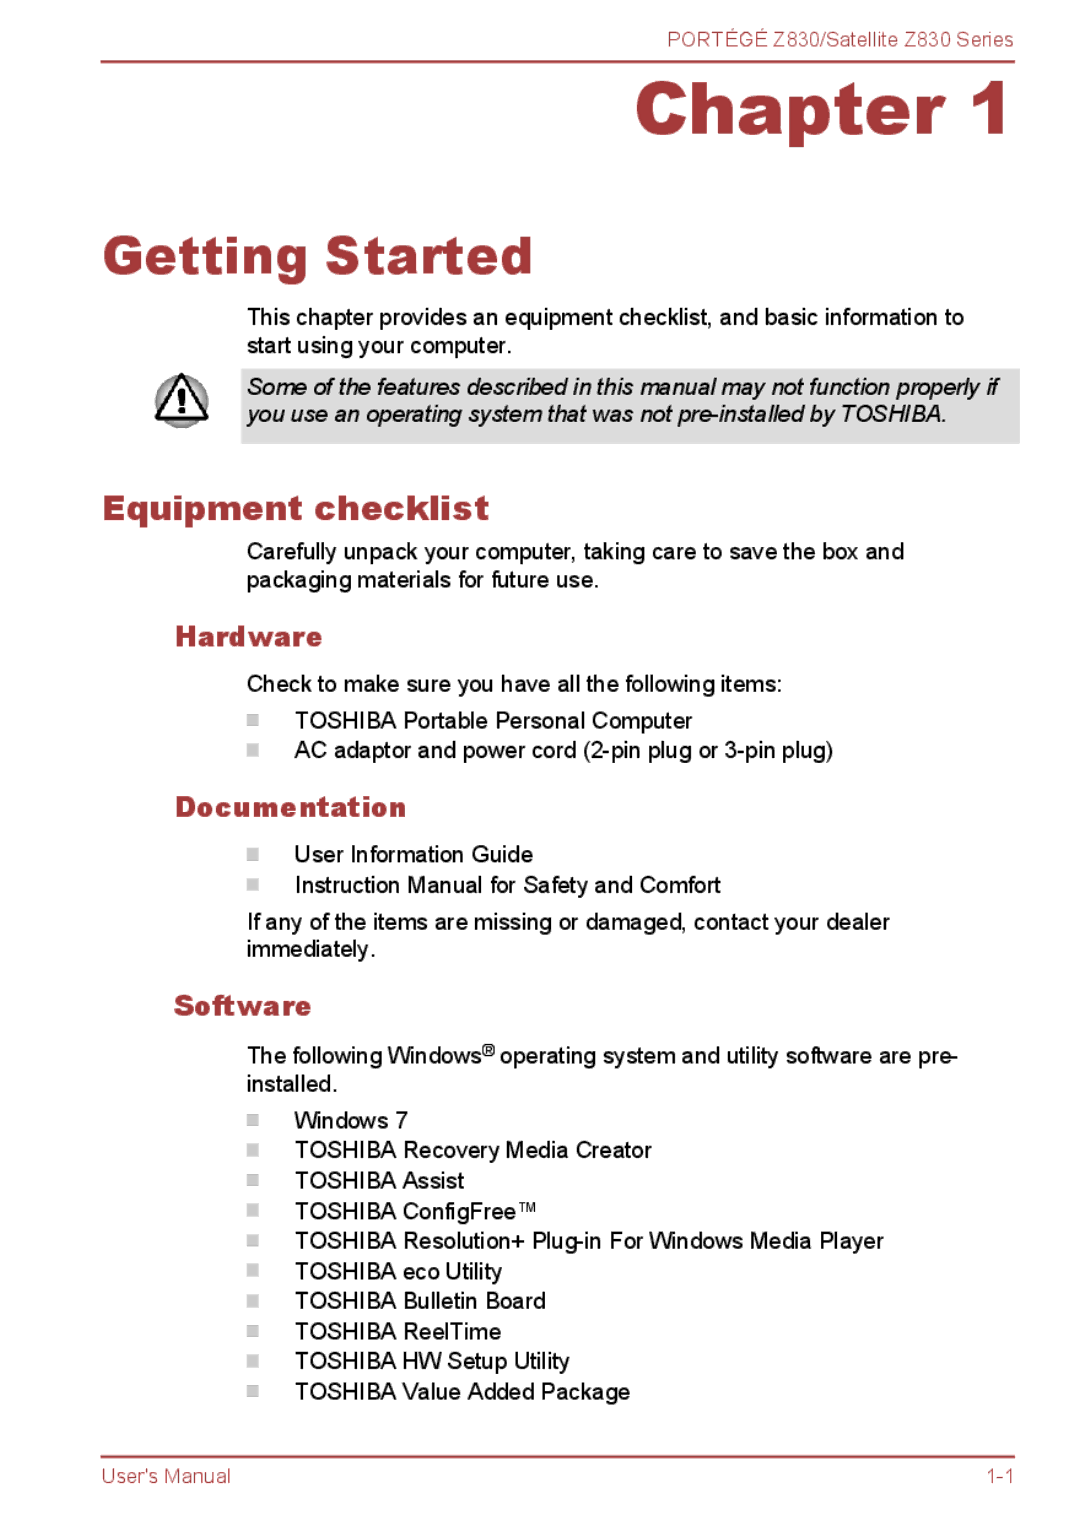 Toshiba Z830 user manual Getting Started, Equipment checklist, Hardware, Documentation, Software 